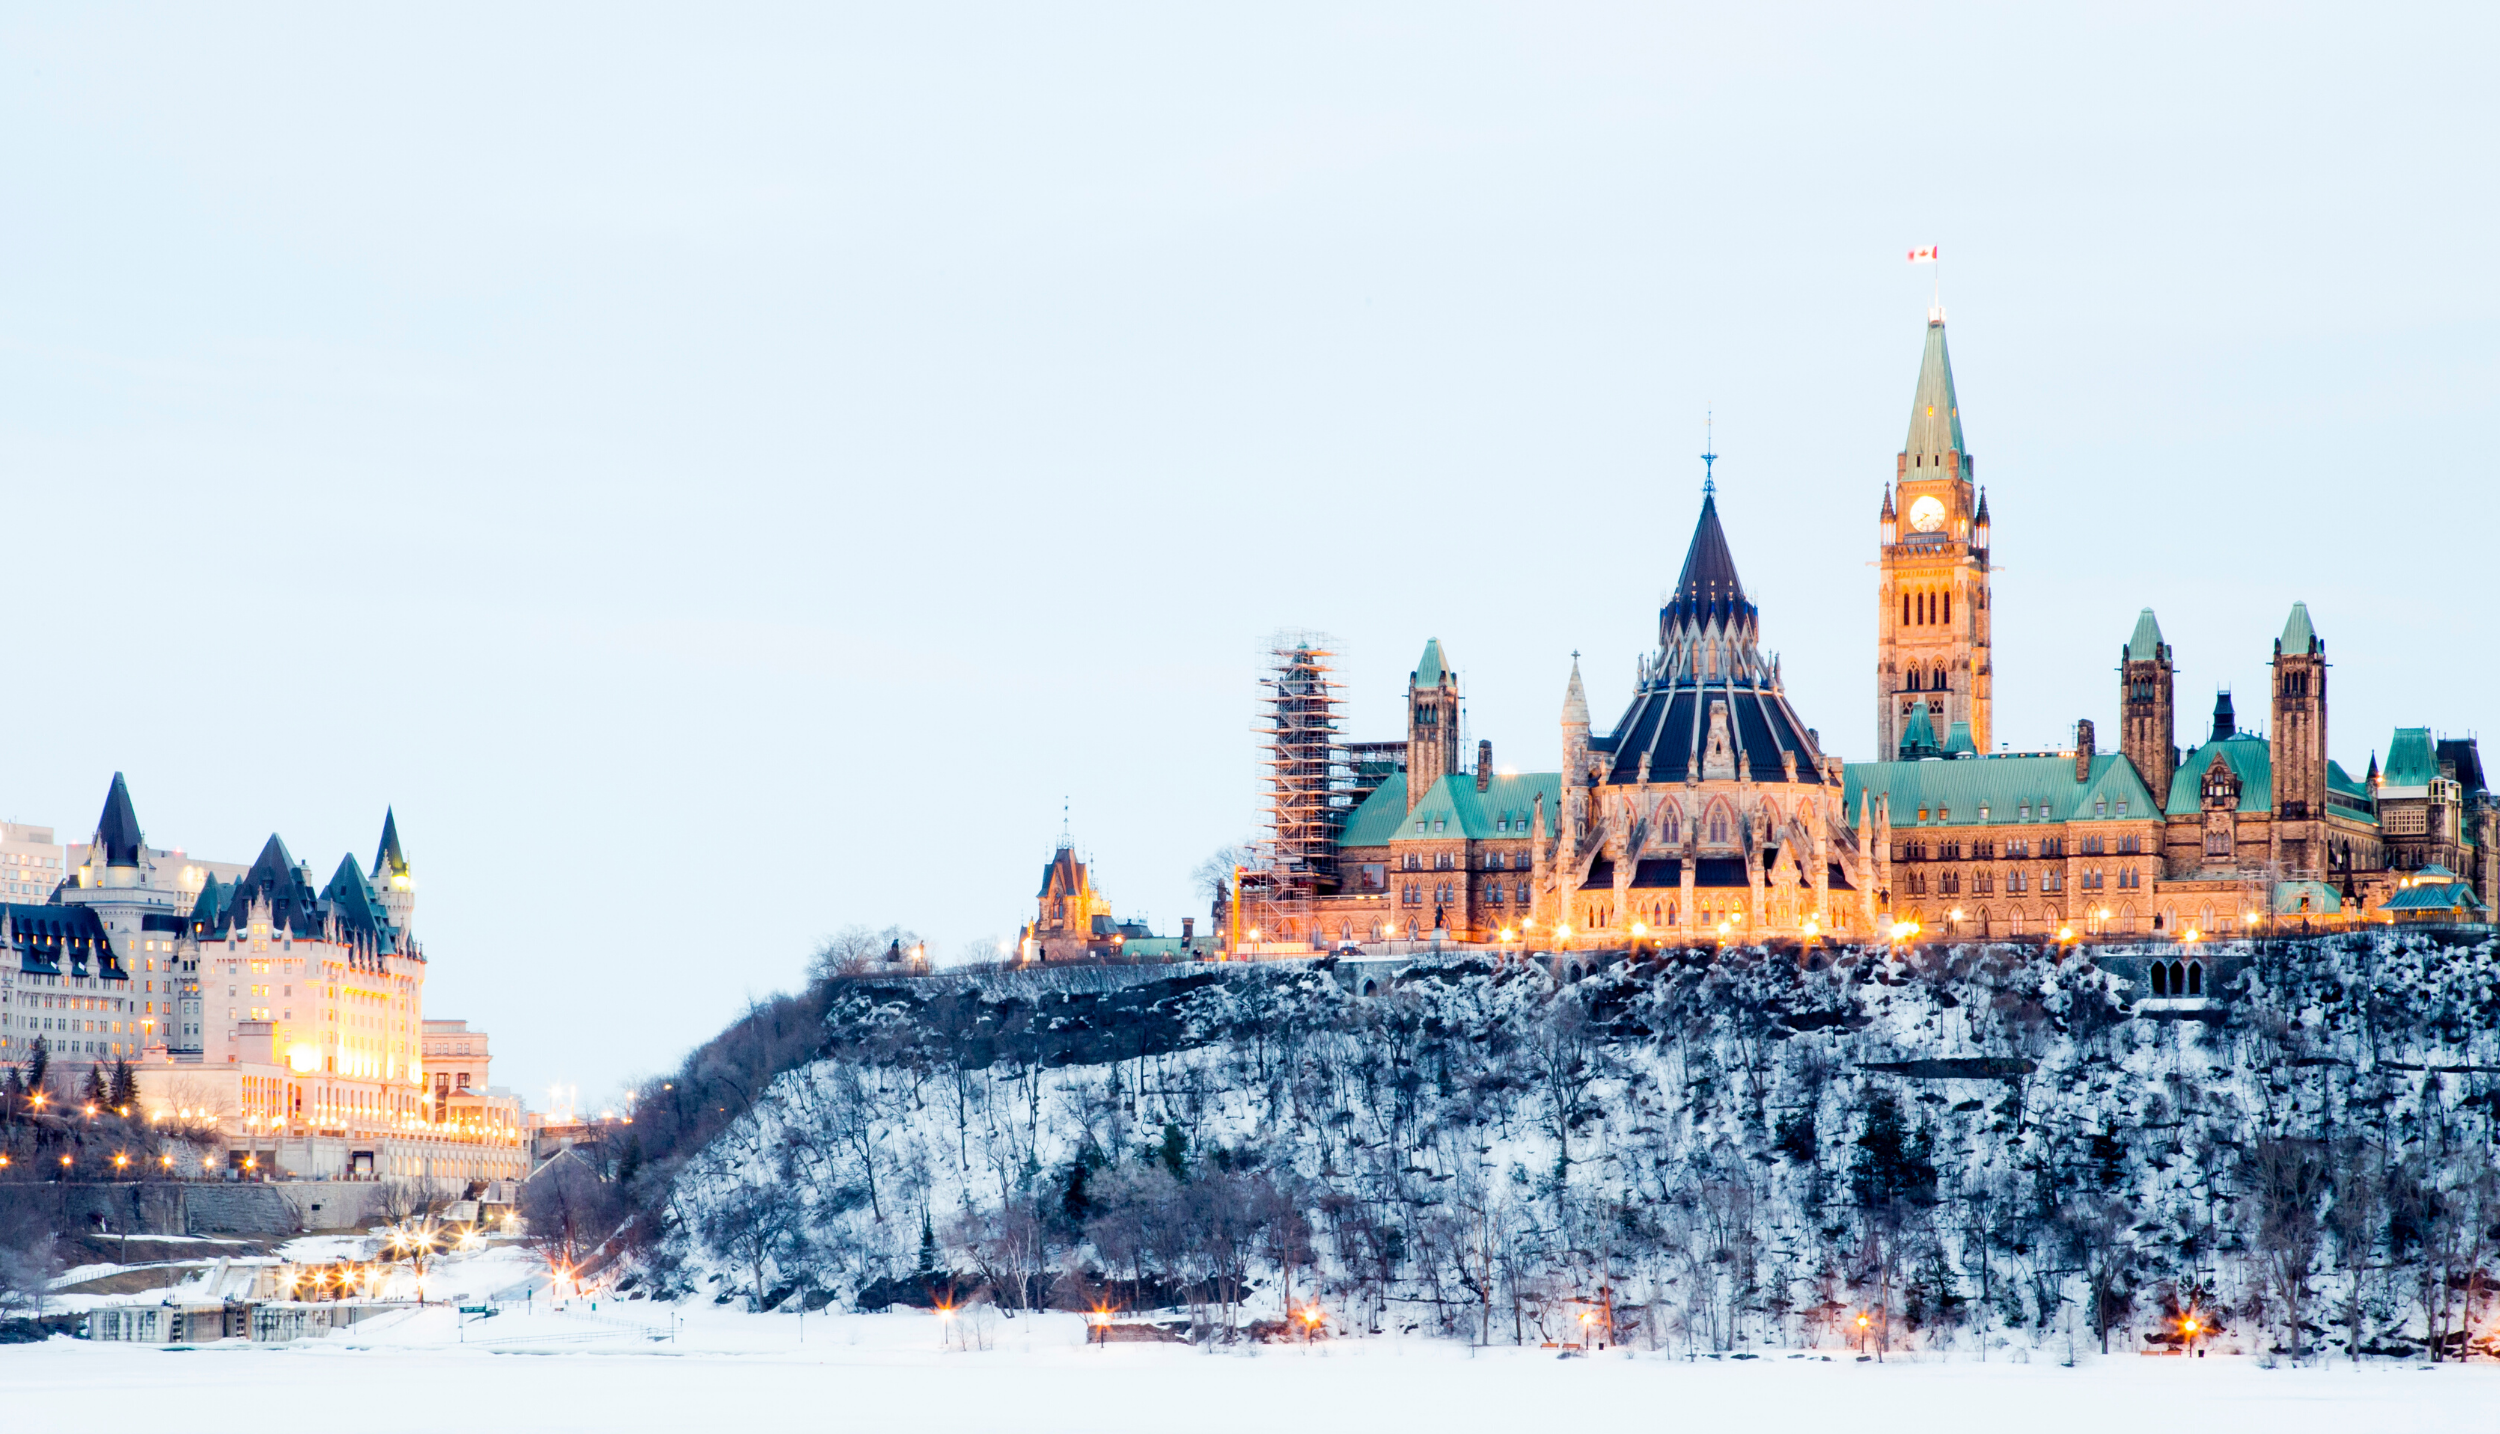 Parliament Hill in Ottawa Canada